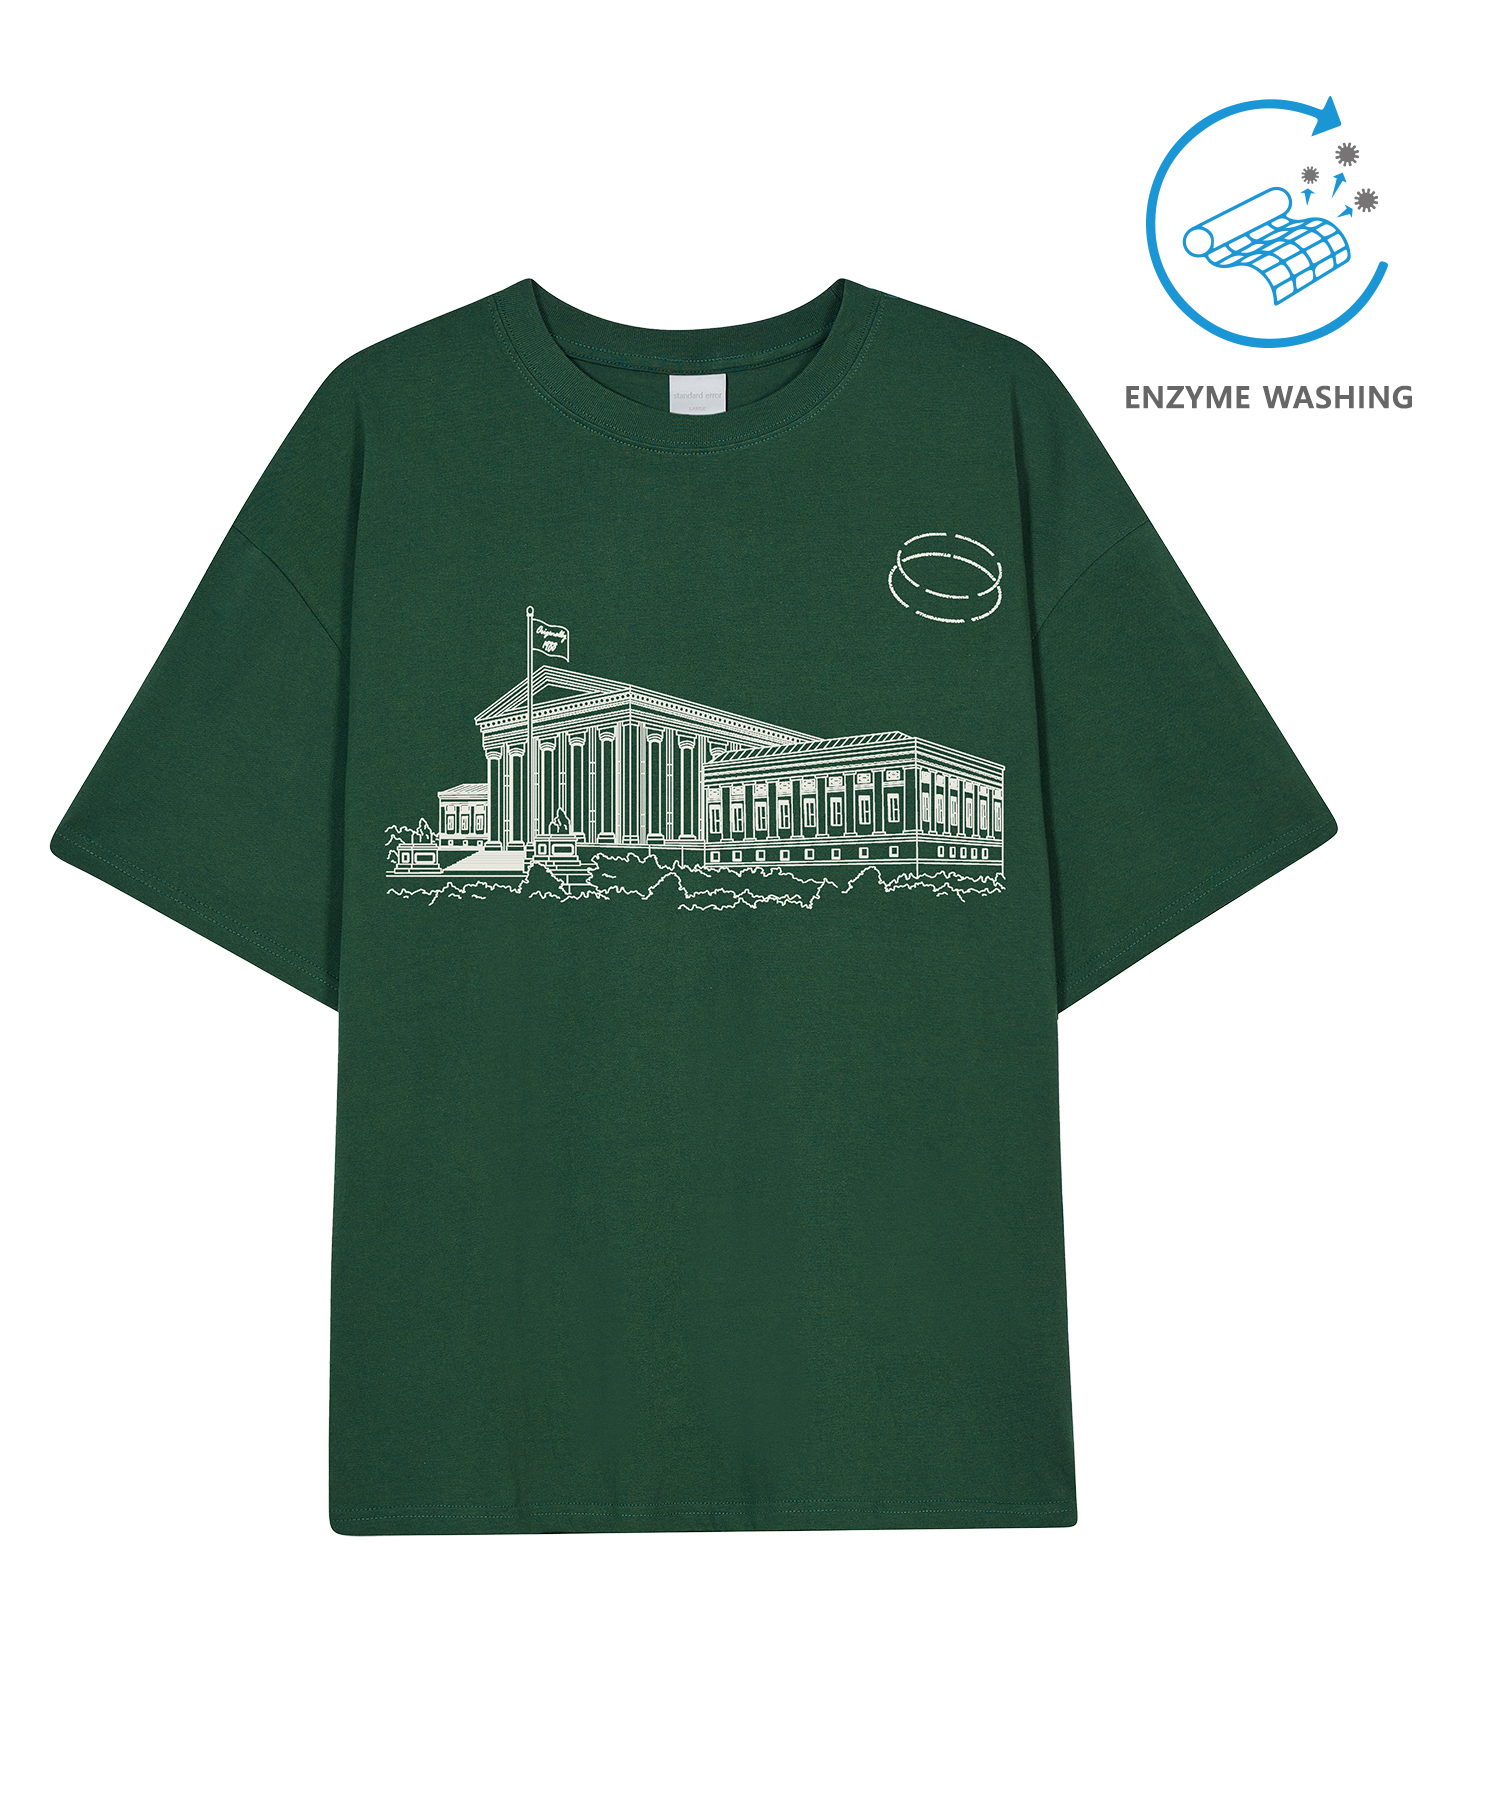 IRT168 [Compact YAN] Enzaim Washing Drawing College Short-sleeved T-shirt Deep Green